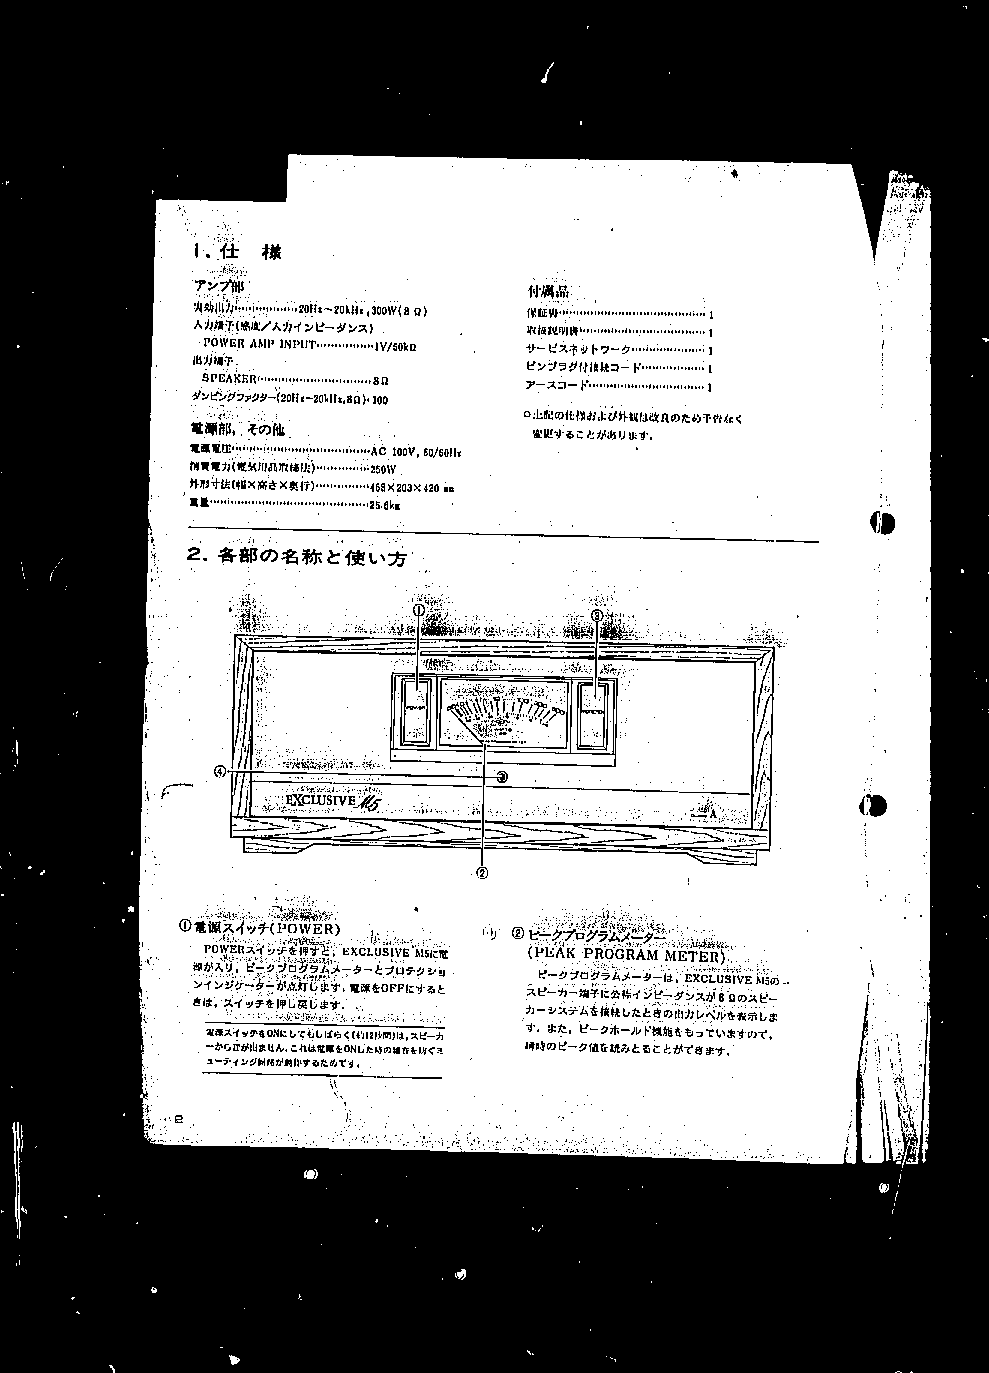 PIONEER EXCLUSIVE-M5 ORIGINAL SM service manual (2nd page)